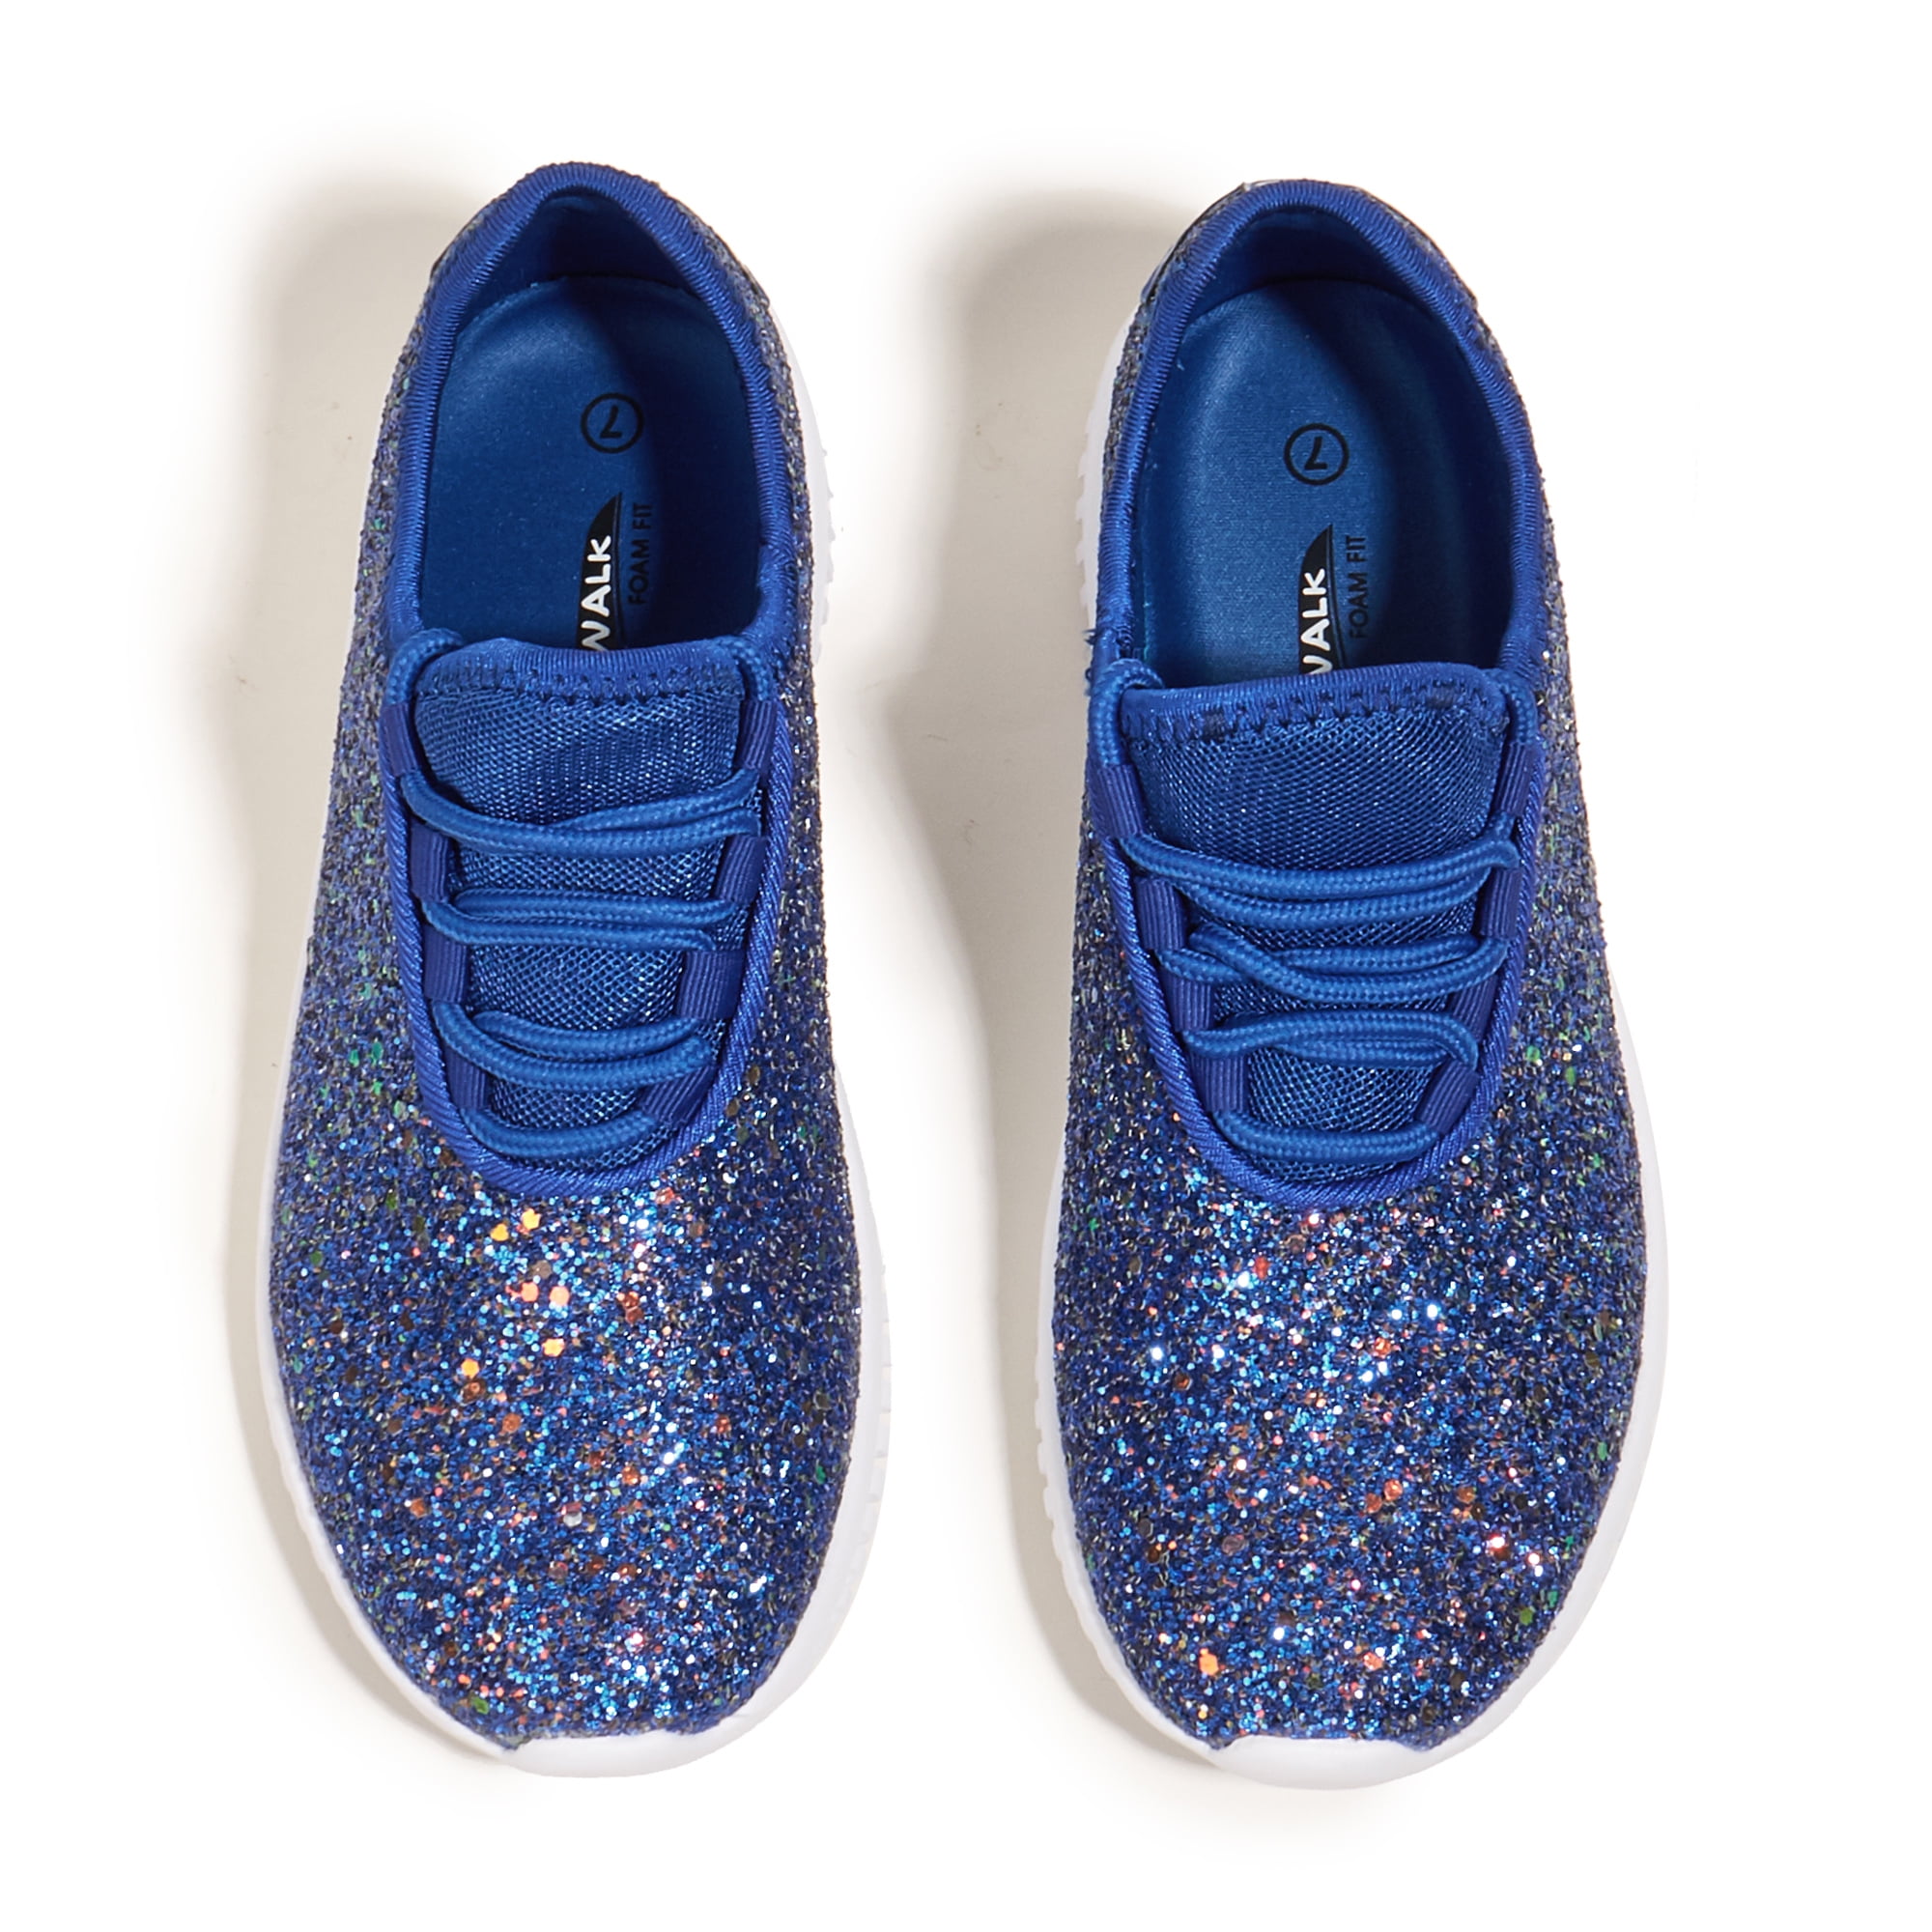 Fysica voor eeuwig Aanpassen LUCKY STEP Fashion Glitter Sneakers for Womens/Girls Silp On Running Shoes  Lightweigt Tennis Walking Sneakers(Blue,10B(M)US) - Walmart.com